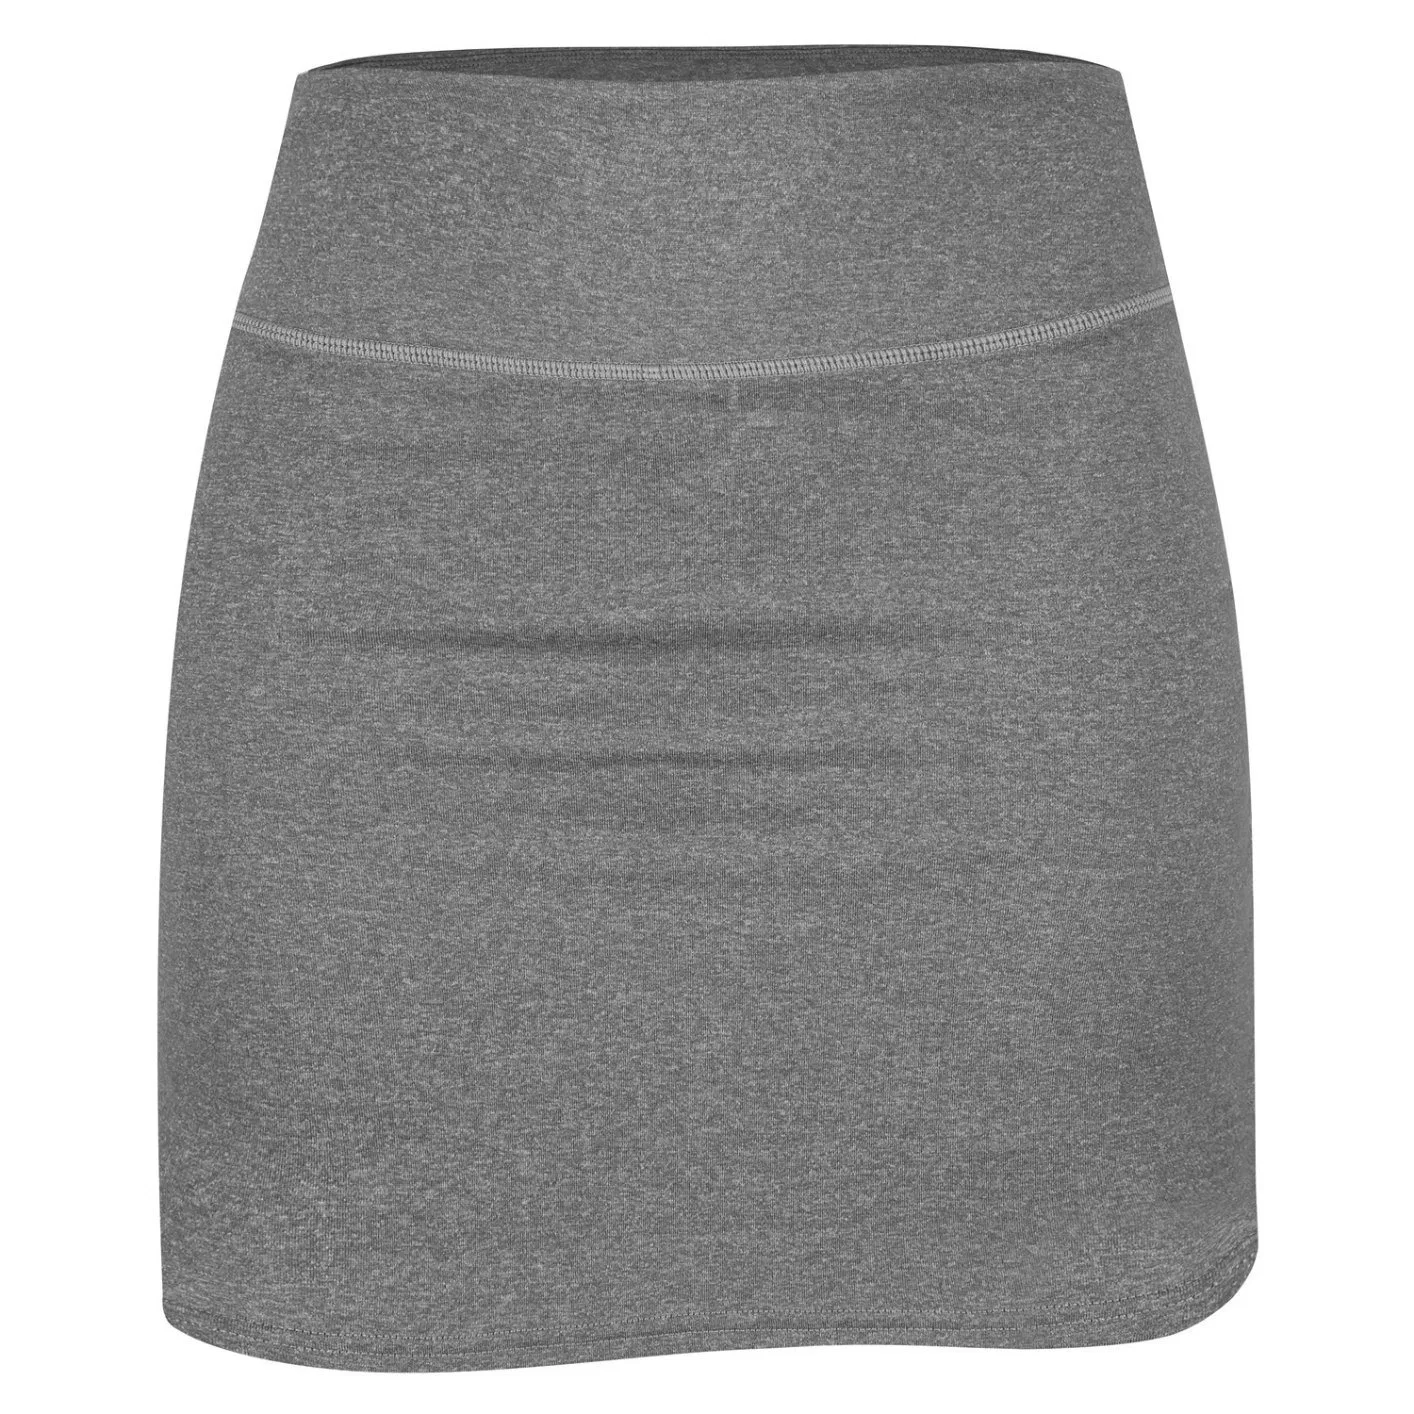 Golf Tennis Skirt Sports Skirt with Inner Shorts and Pocket Running Workout Bl16136